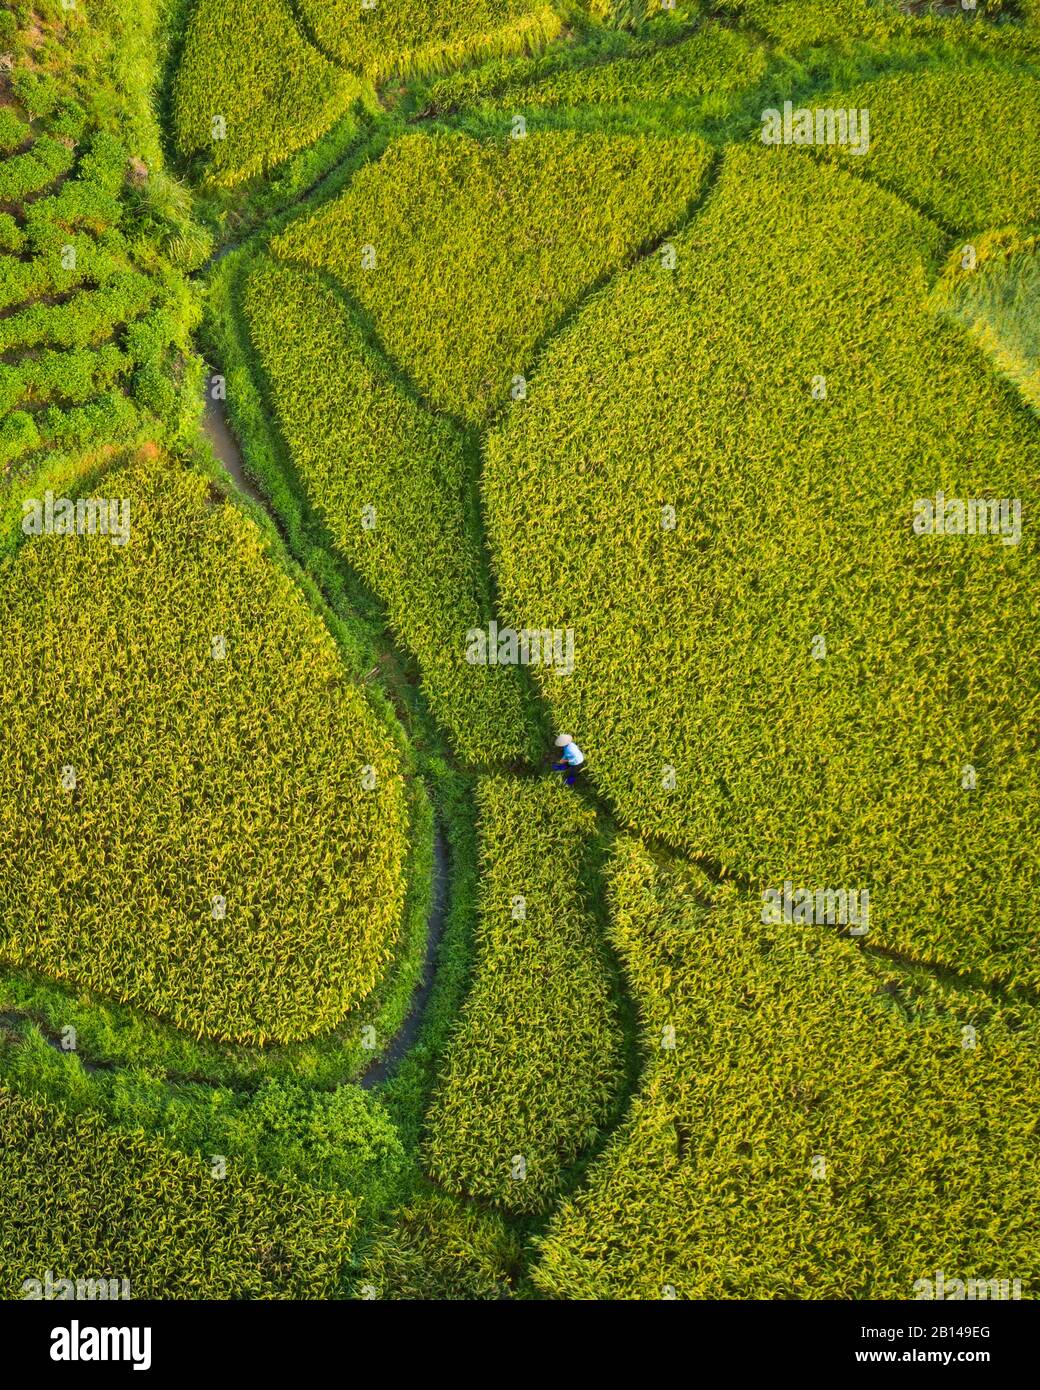 Rice fields near Hanoi, aerial view, Vietnam Stock Photo